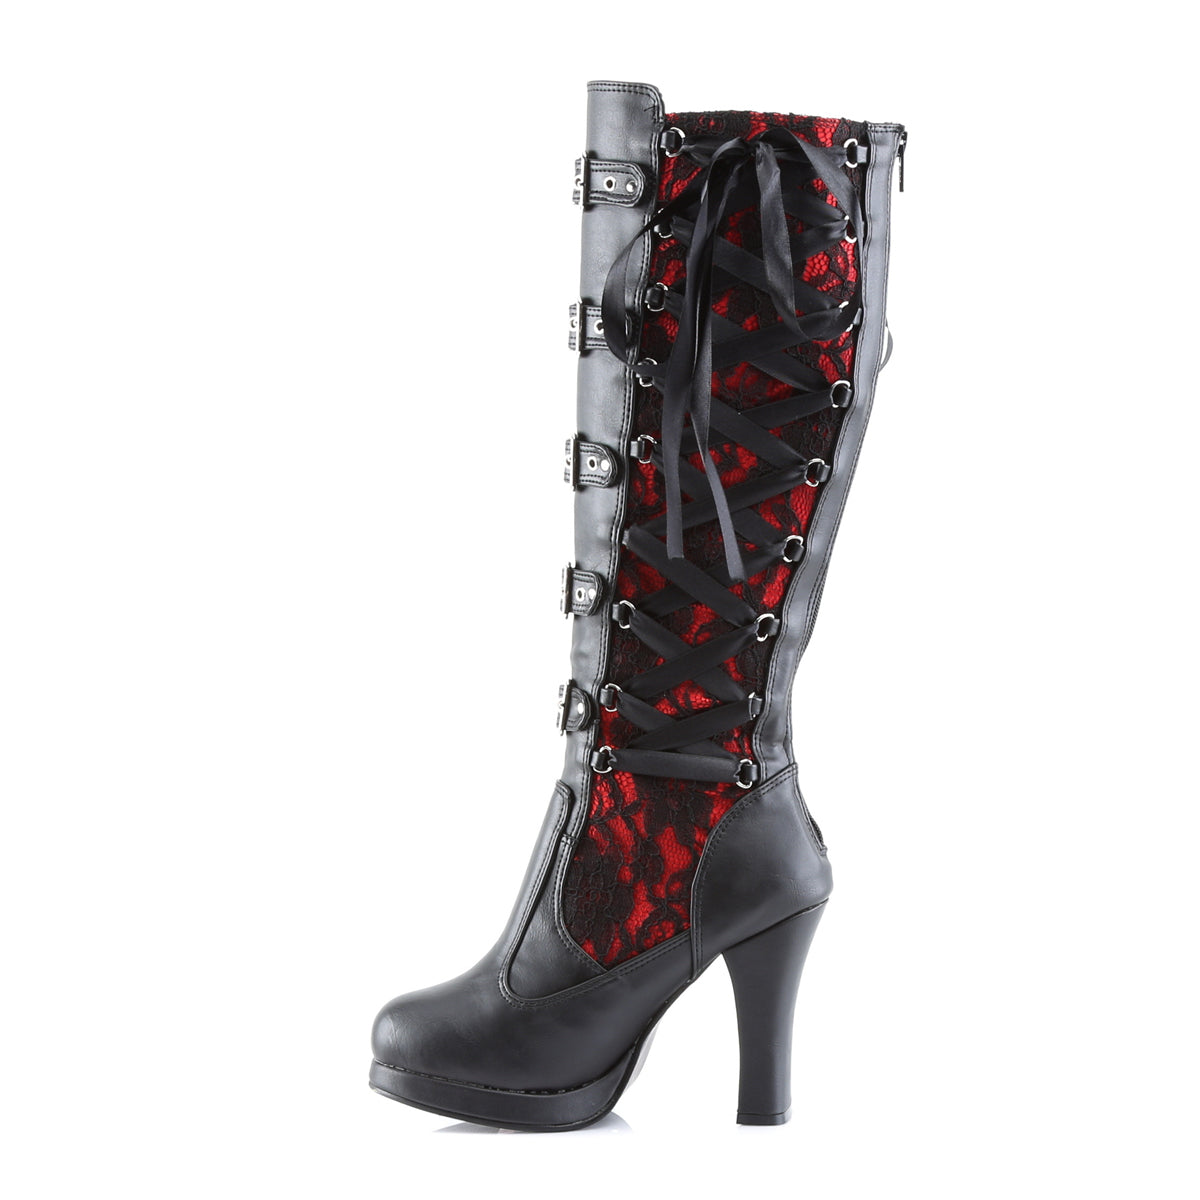 CRYPTO-106 Demonia Black-Red Vegan Leather Women's Mid-Calf & Knee High Boots [Demonia Cult Alternative Footwear]